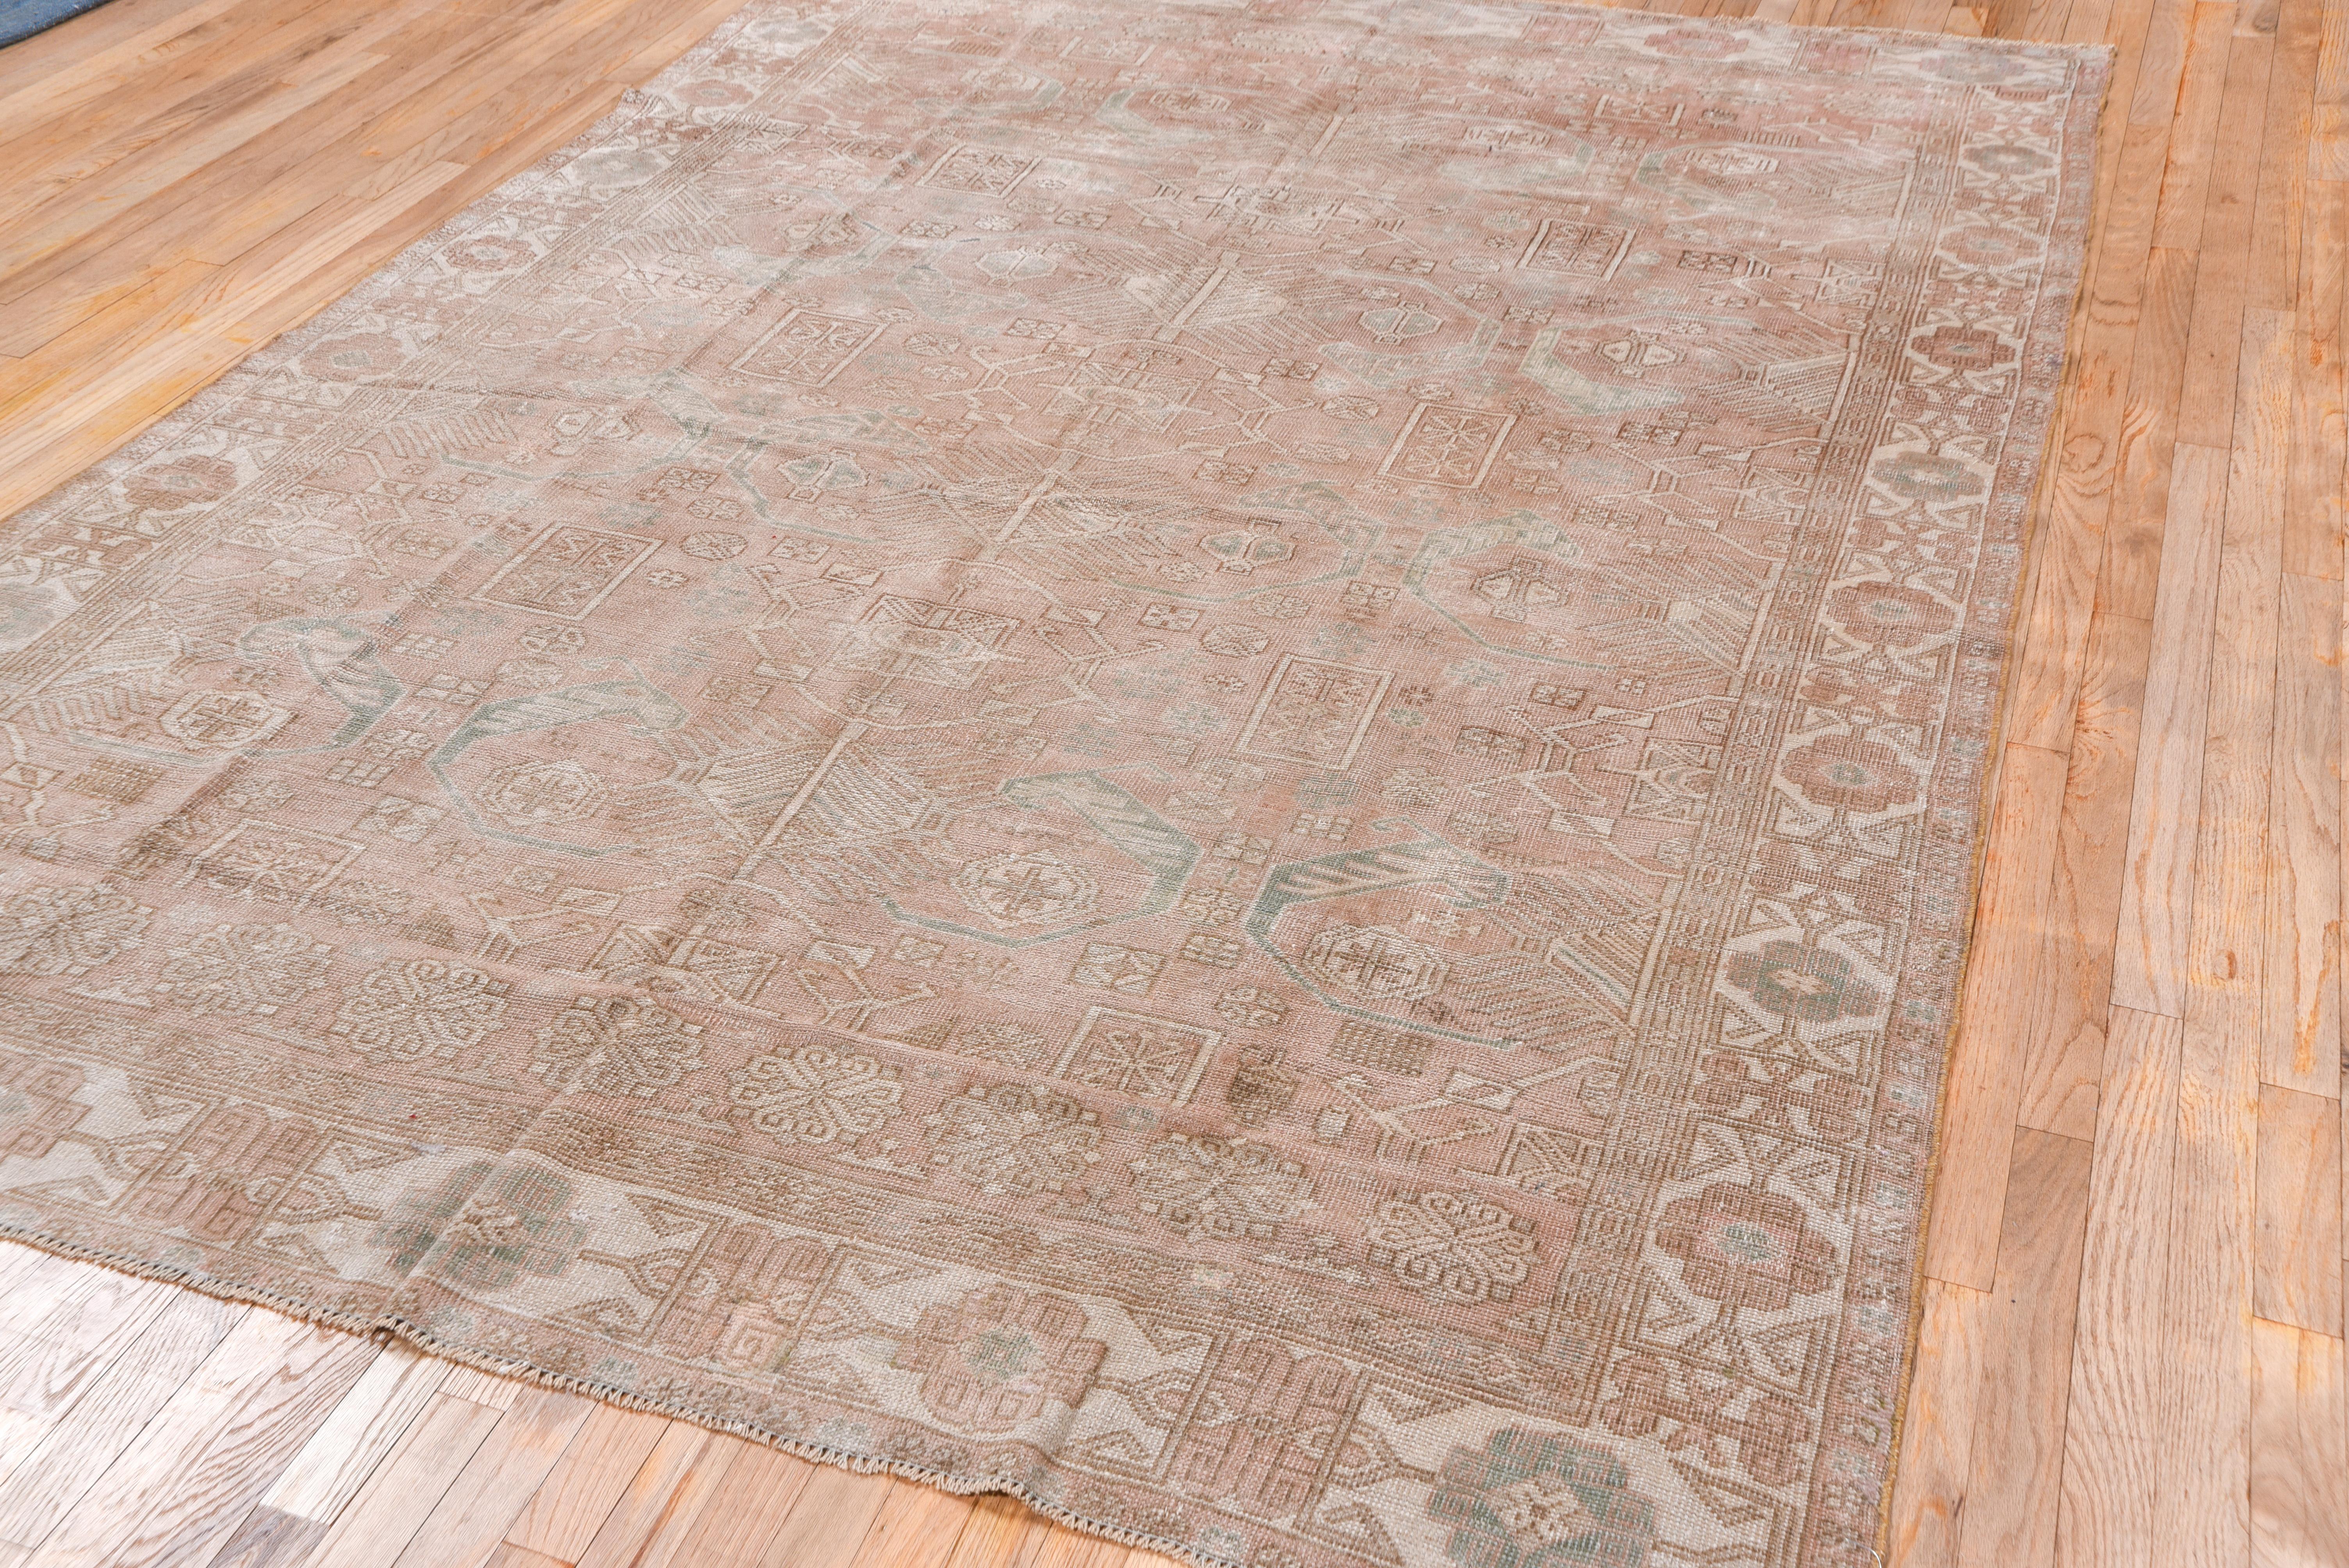 Wool Antique Turkish Oushak Carpet, Light Brown Field, circa 1930s For Sale